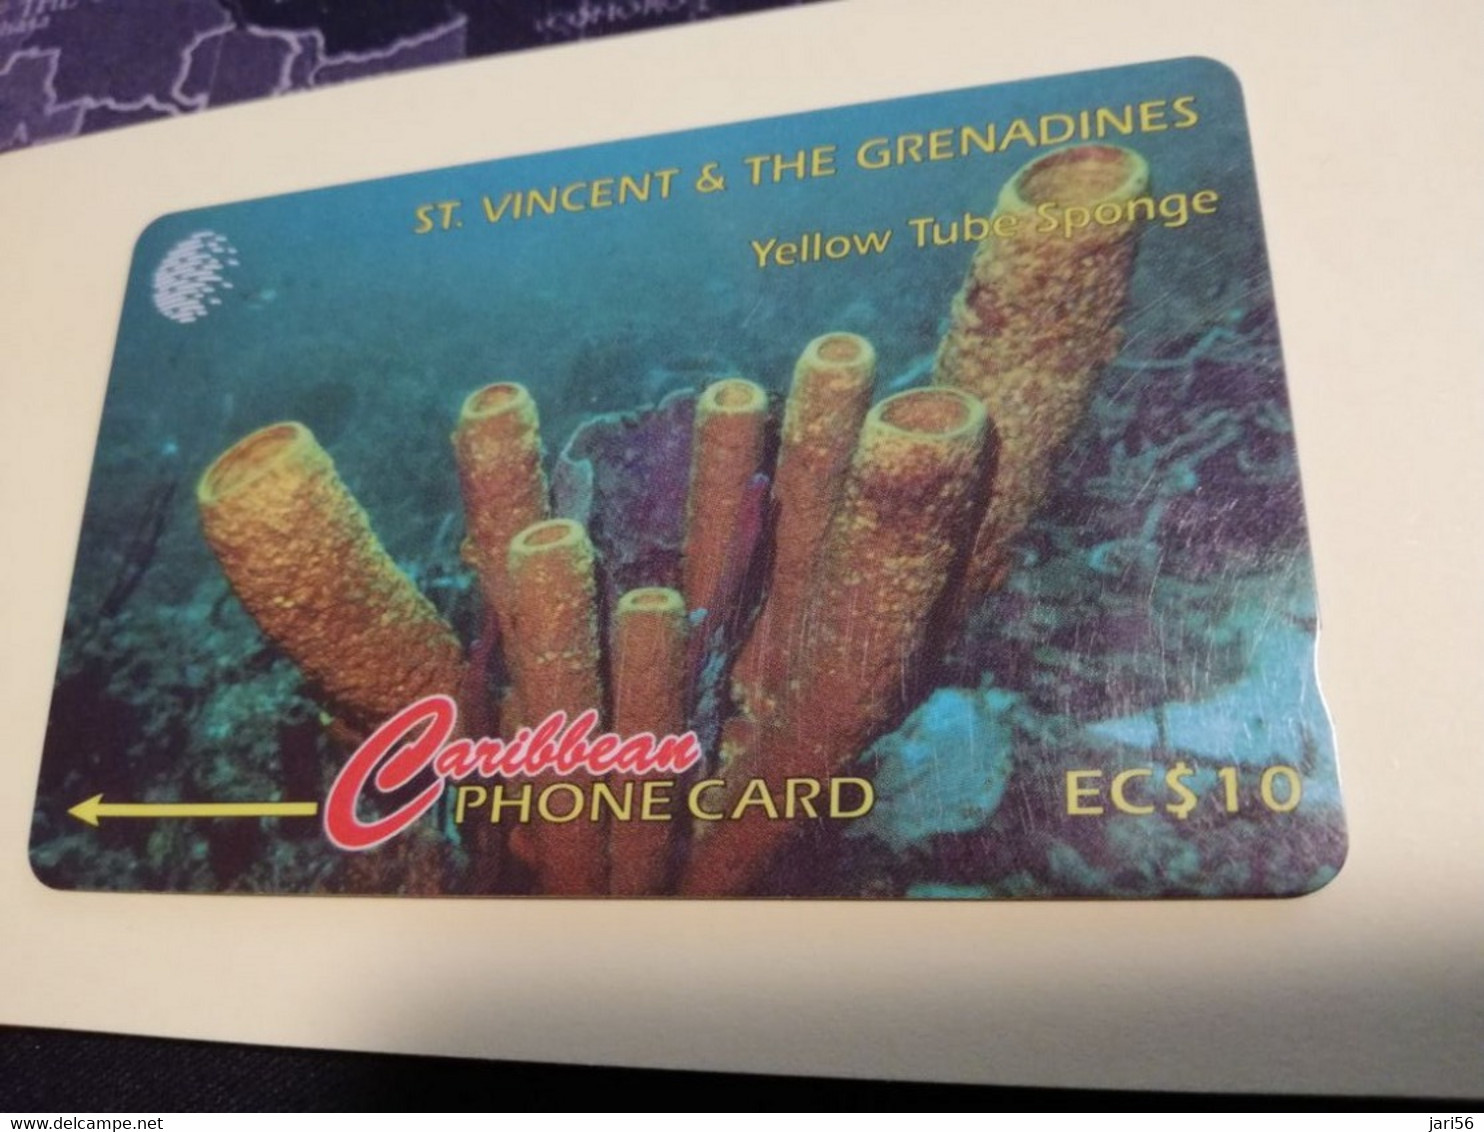 ST VINCENT & GRENADINES  GPT CARD   $ 10,- 52CSVF  YELLOW TUBE SPONGE             C&W    Fine Used  Card  **3380** - Saint-Vincent-et-les-Grenadines